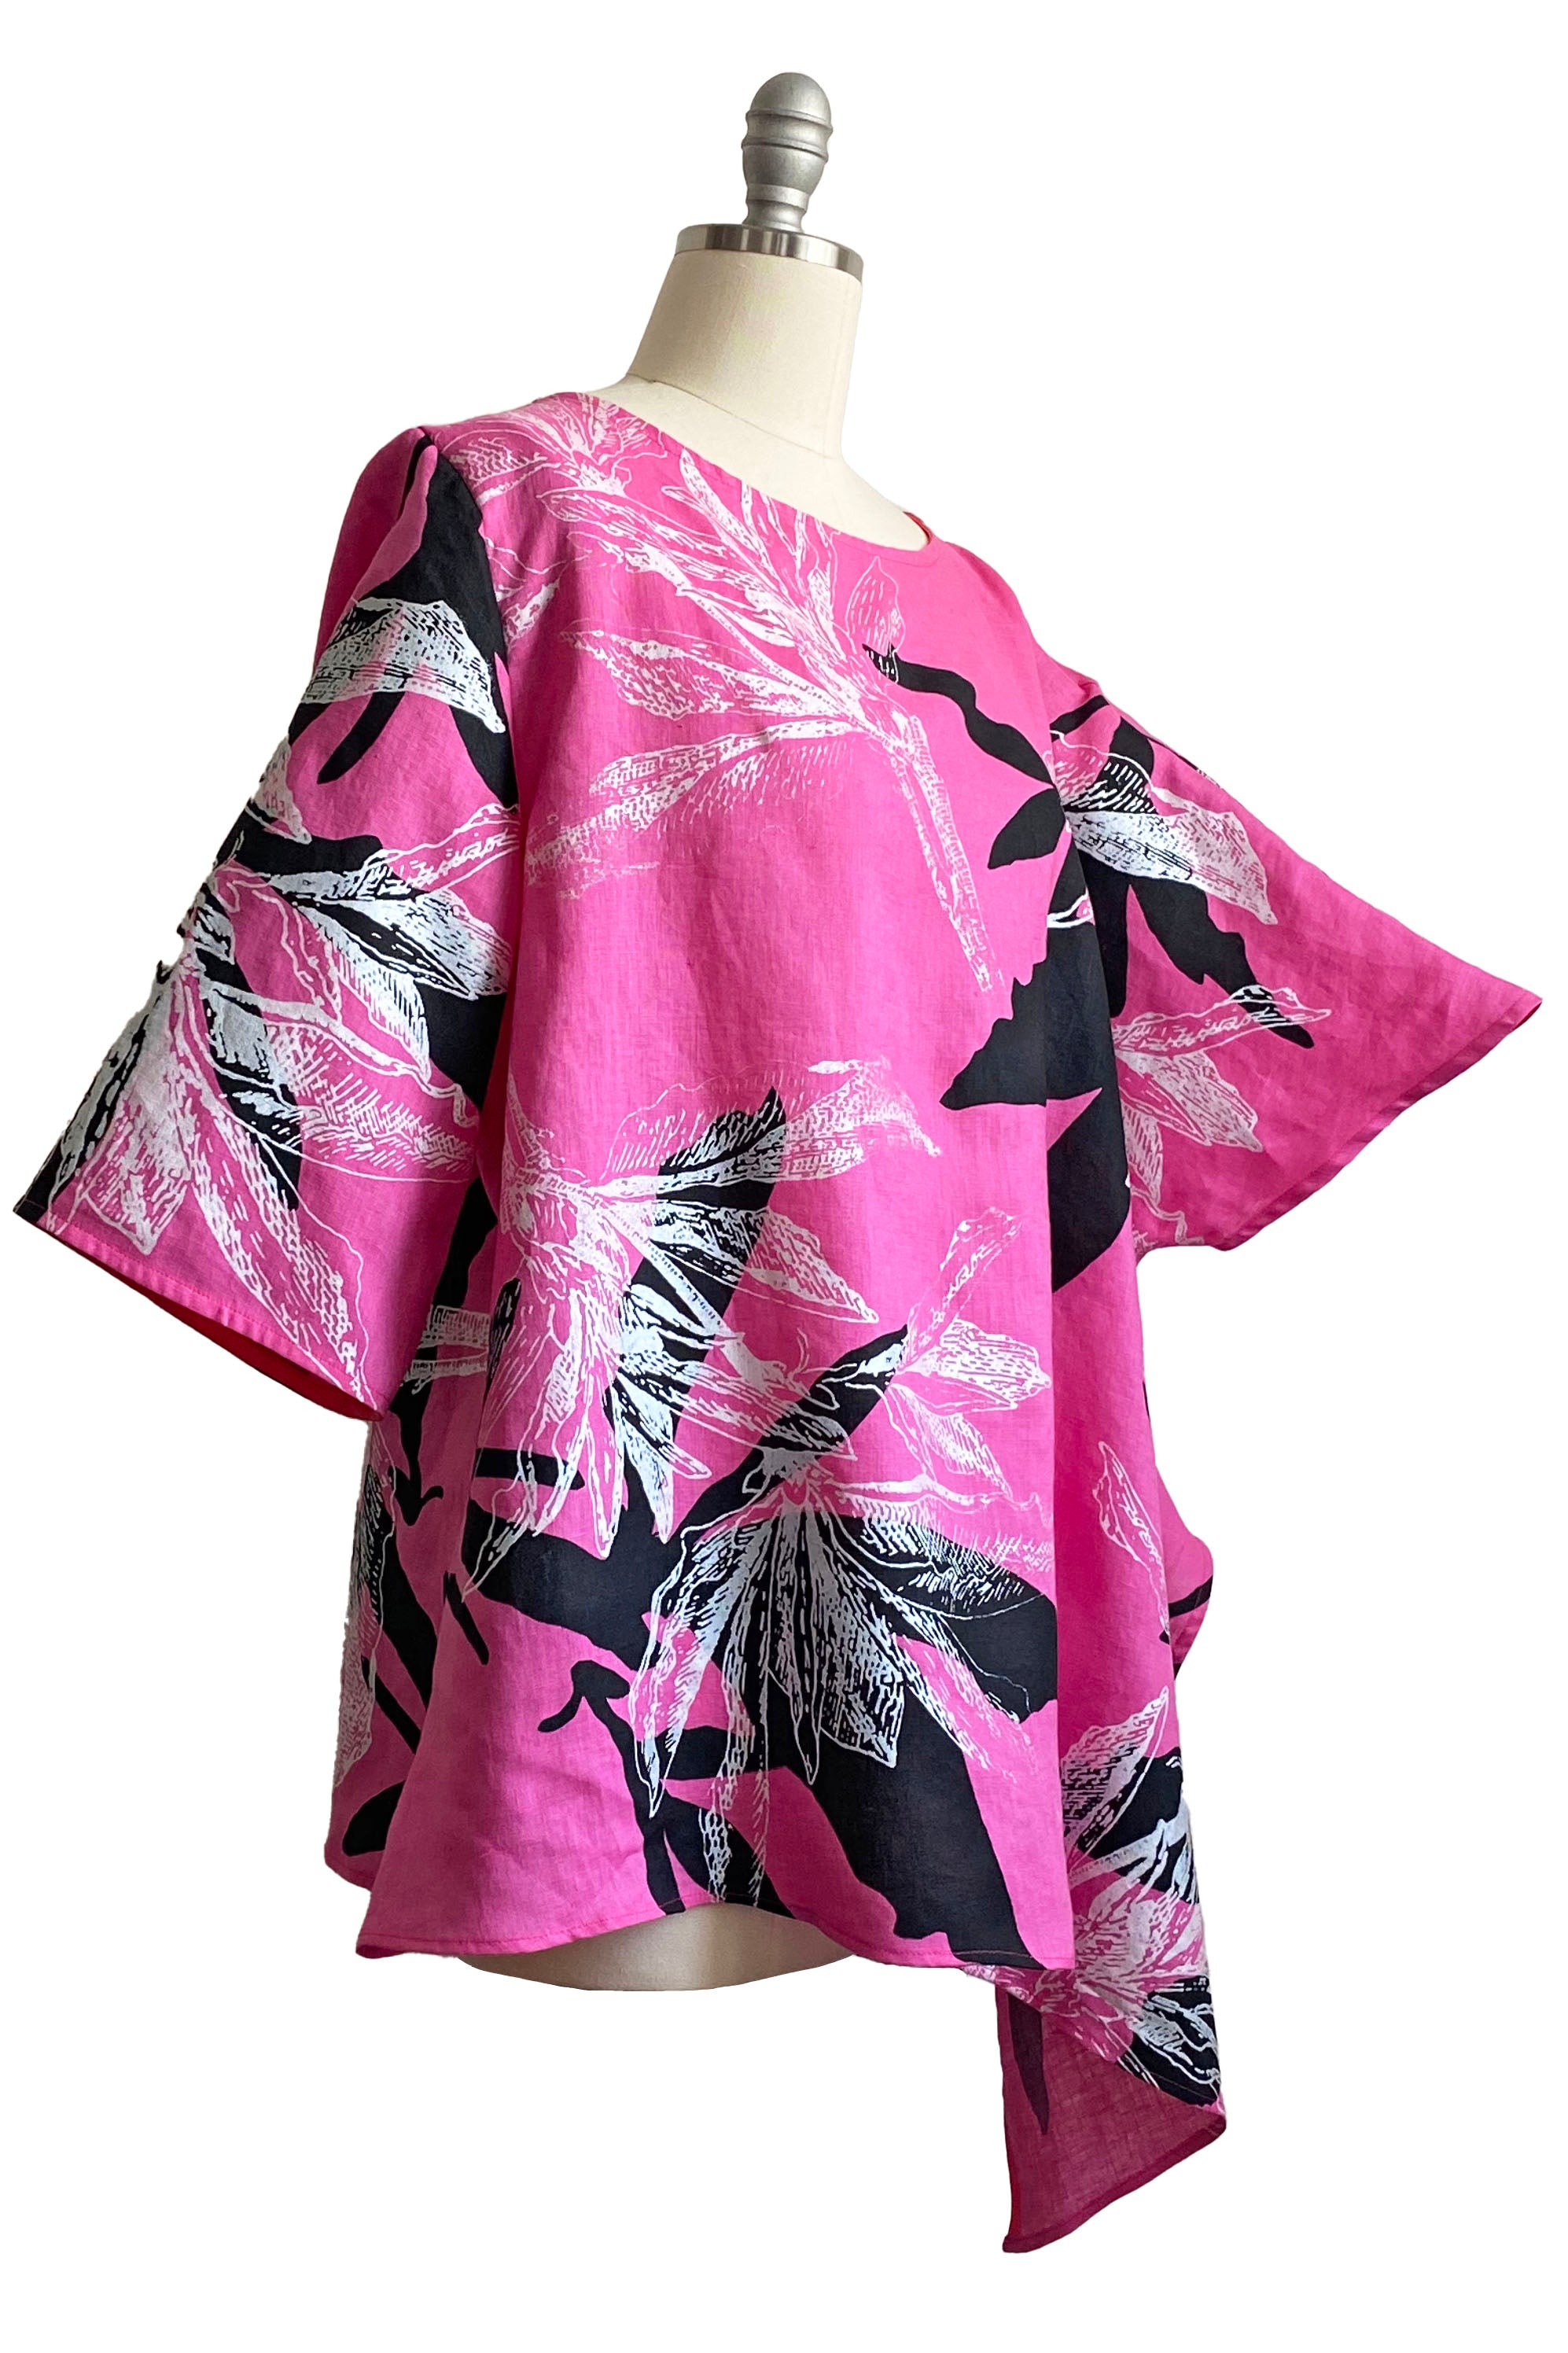 Asymmetrical Top w/ Azalea Print - Hot Pink - L